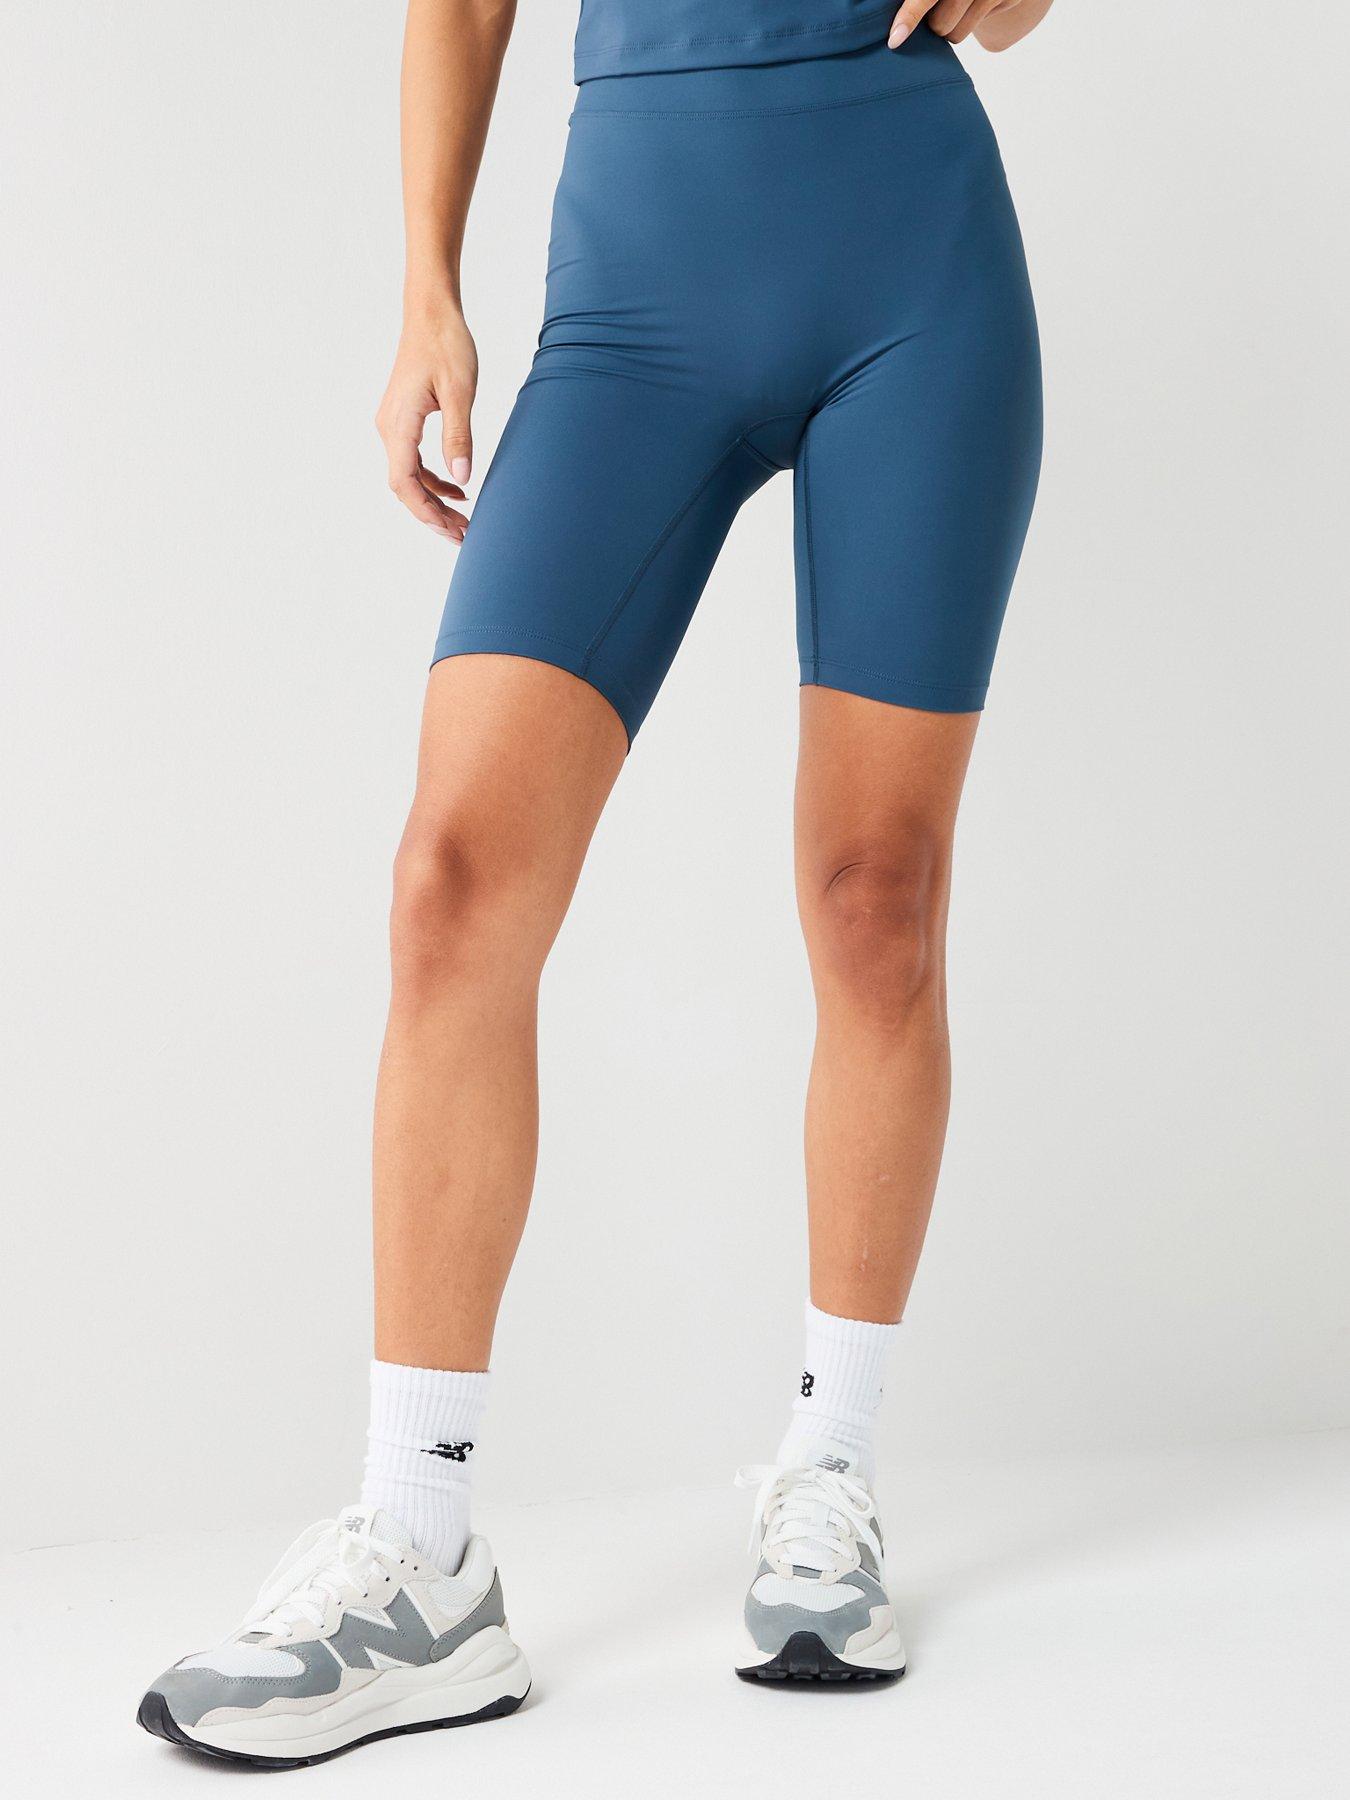 Cycling Shorts for Women - Slate Blue